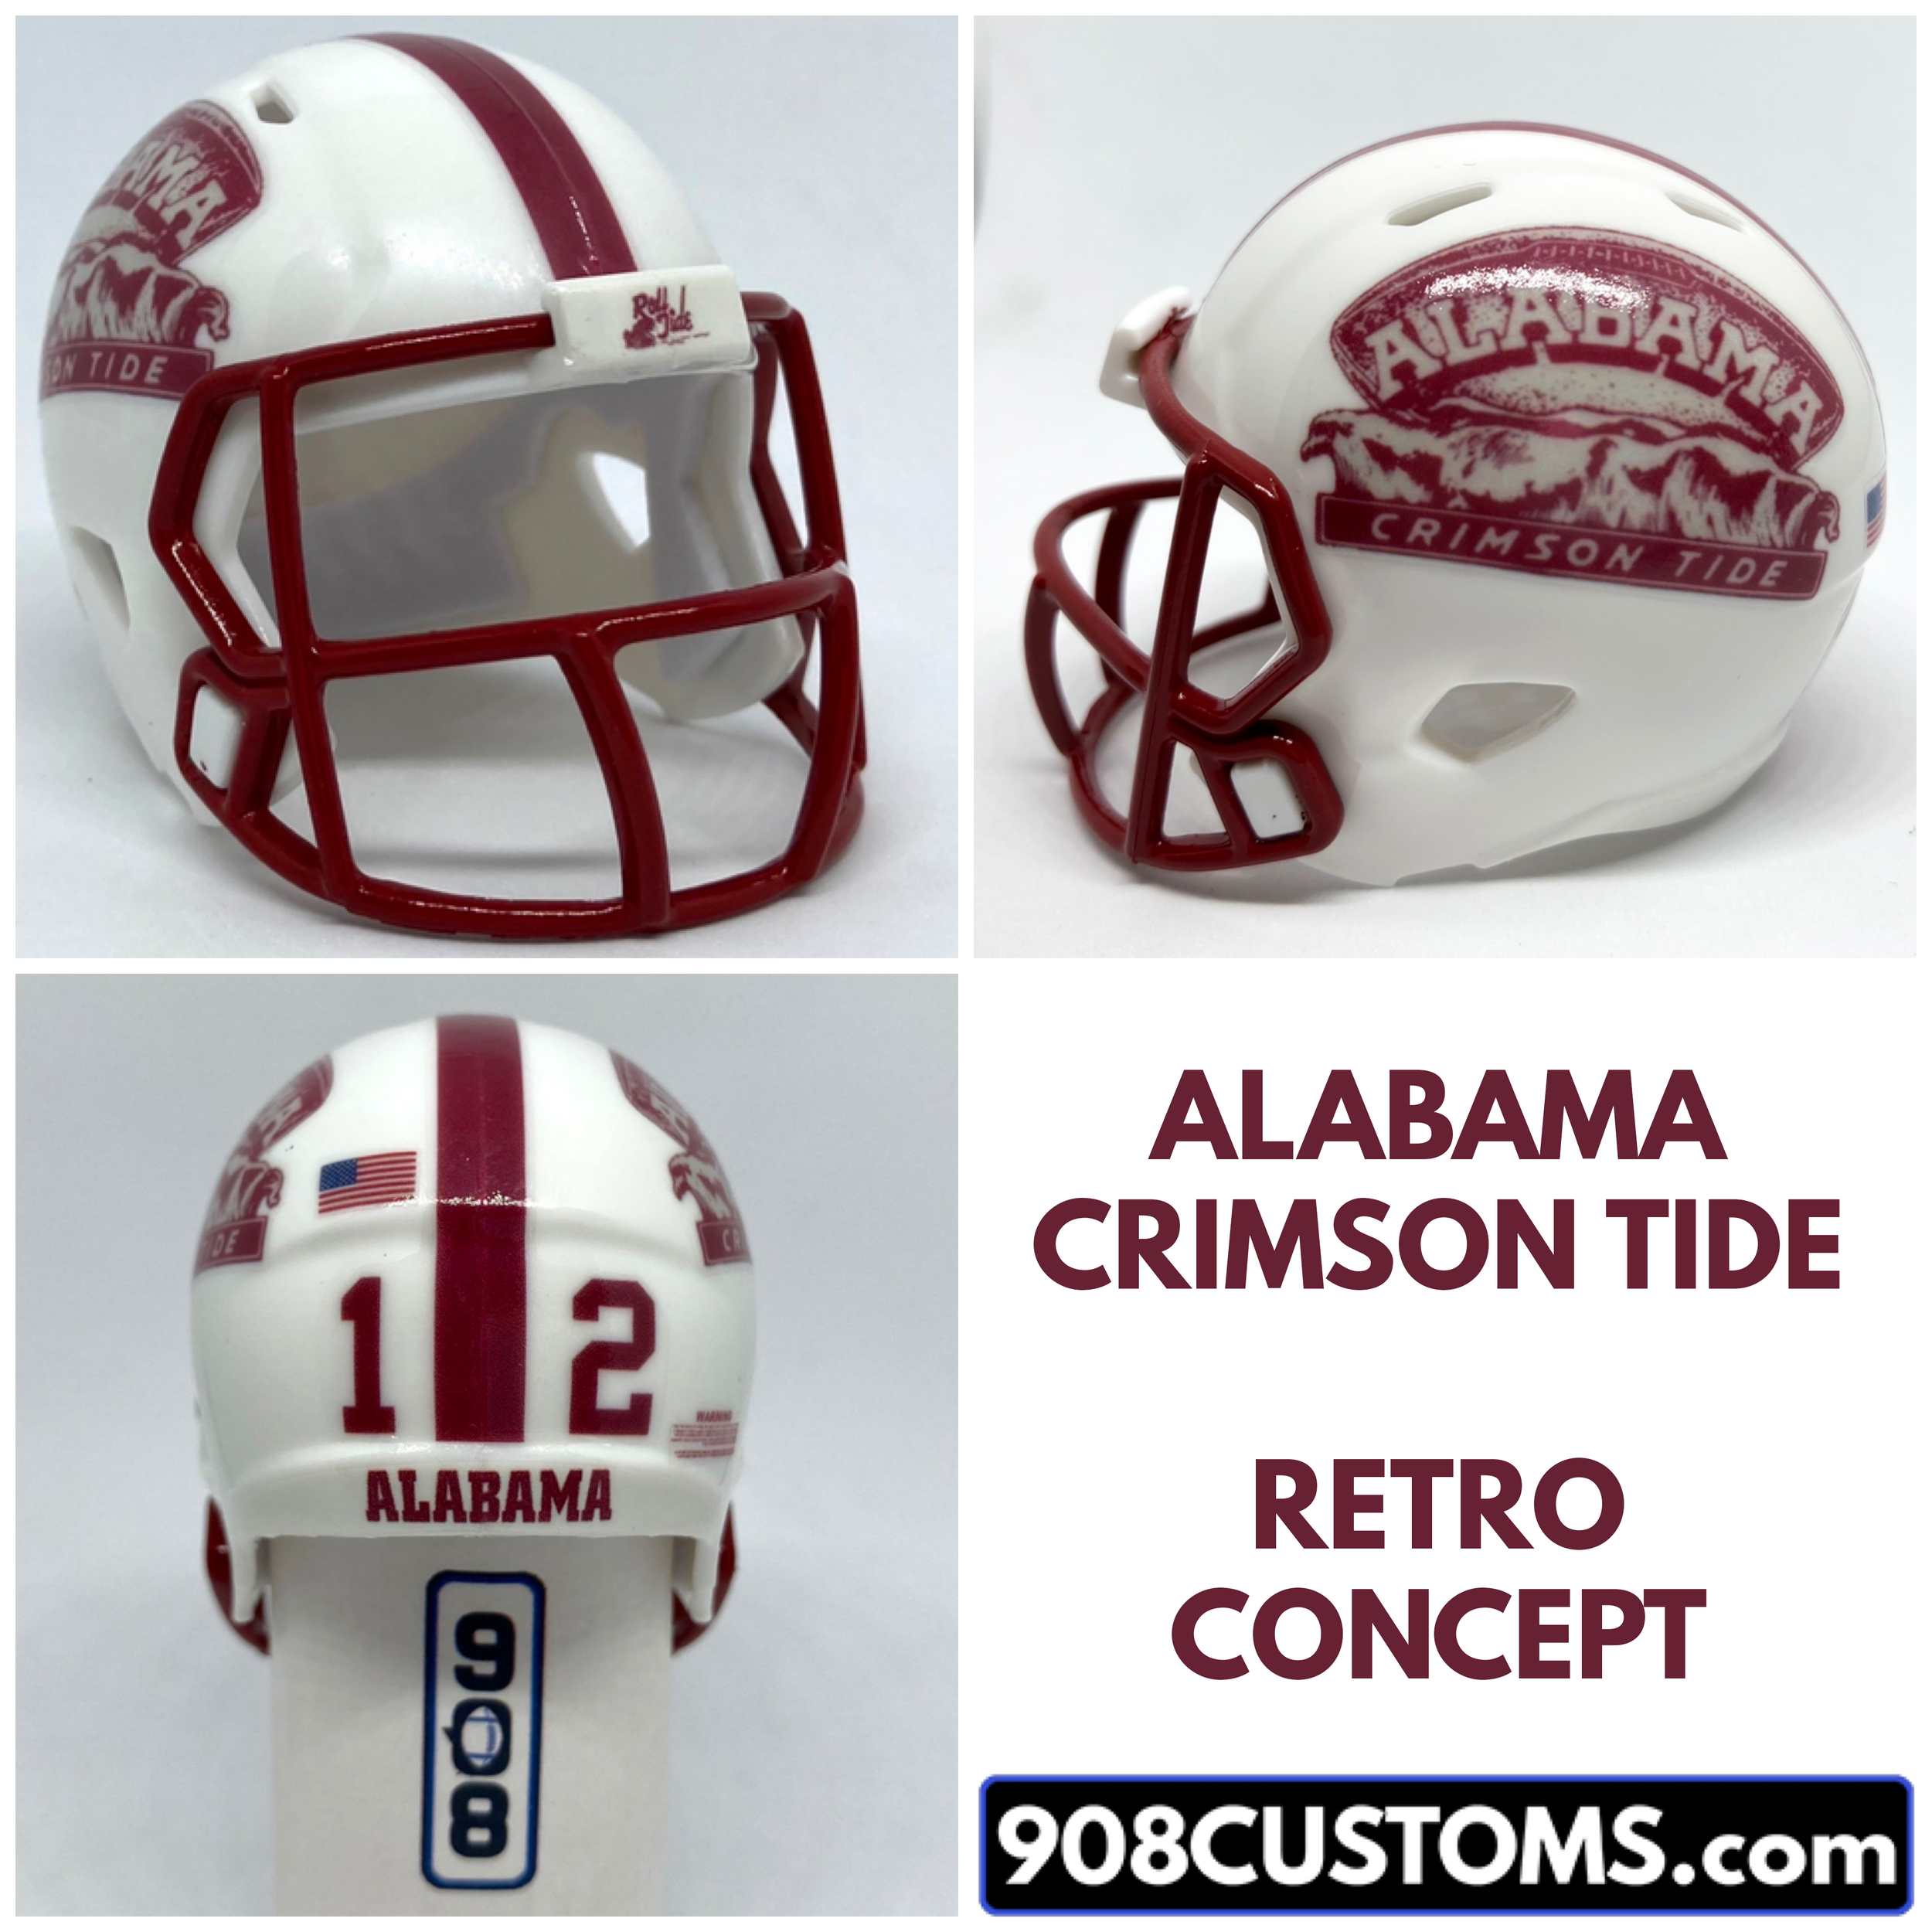 Alabama Crimson Tide Riddell Speed Pocket Pro Football Helmet New in package 